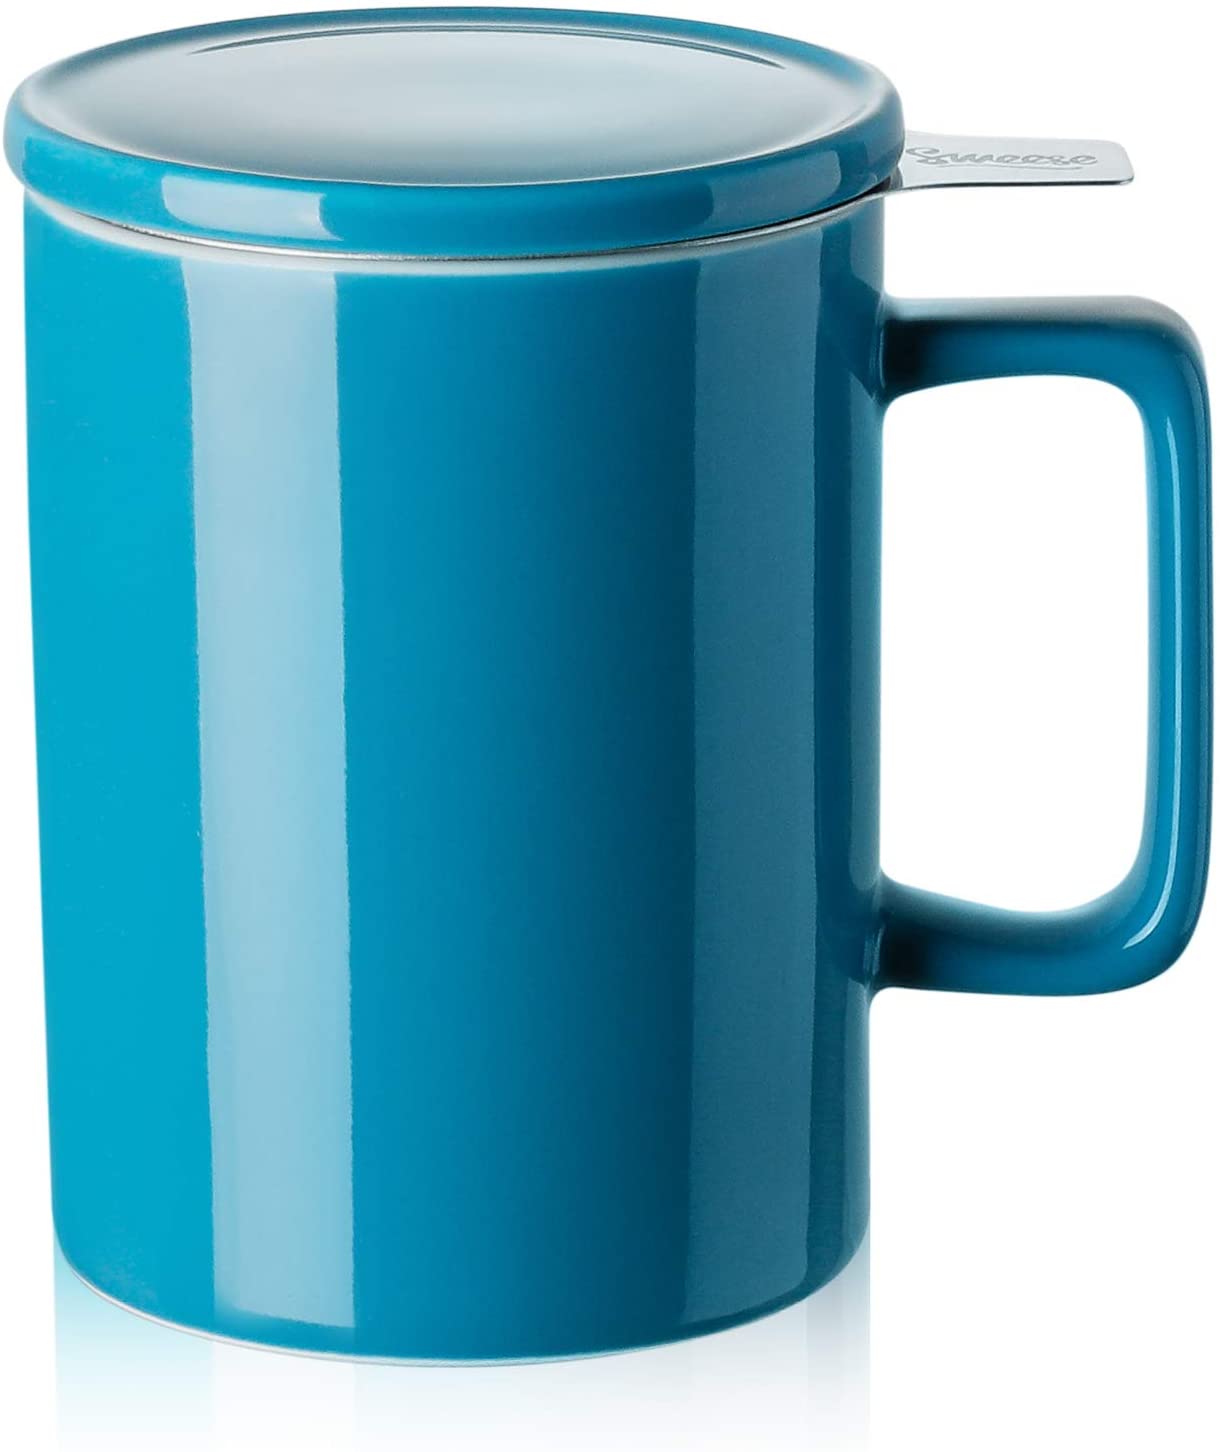 14 OZ Sweese Porcelain Tea Mug with Infuser and Lid $8.99